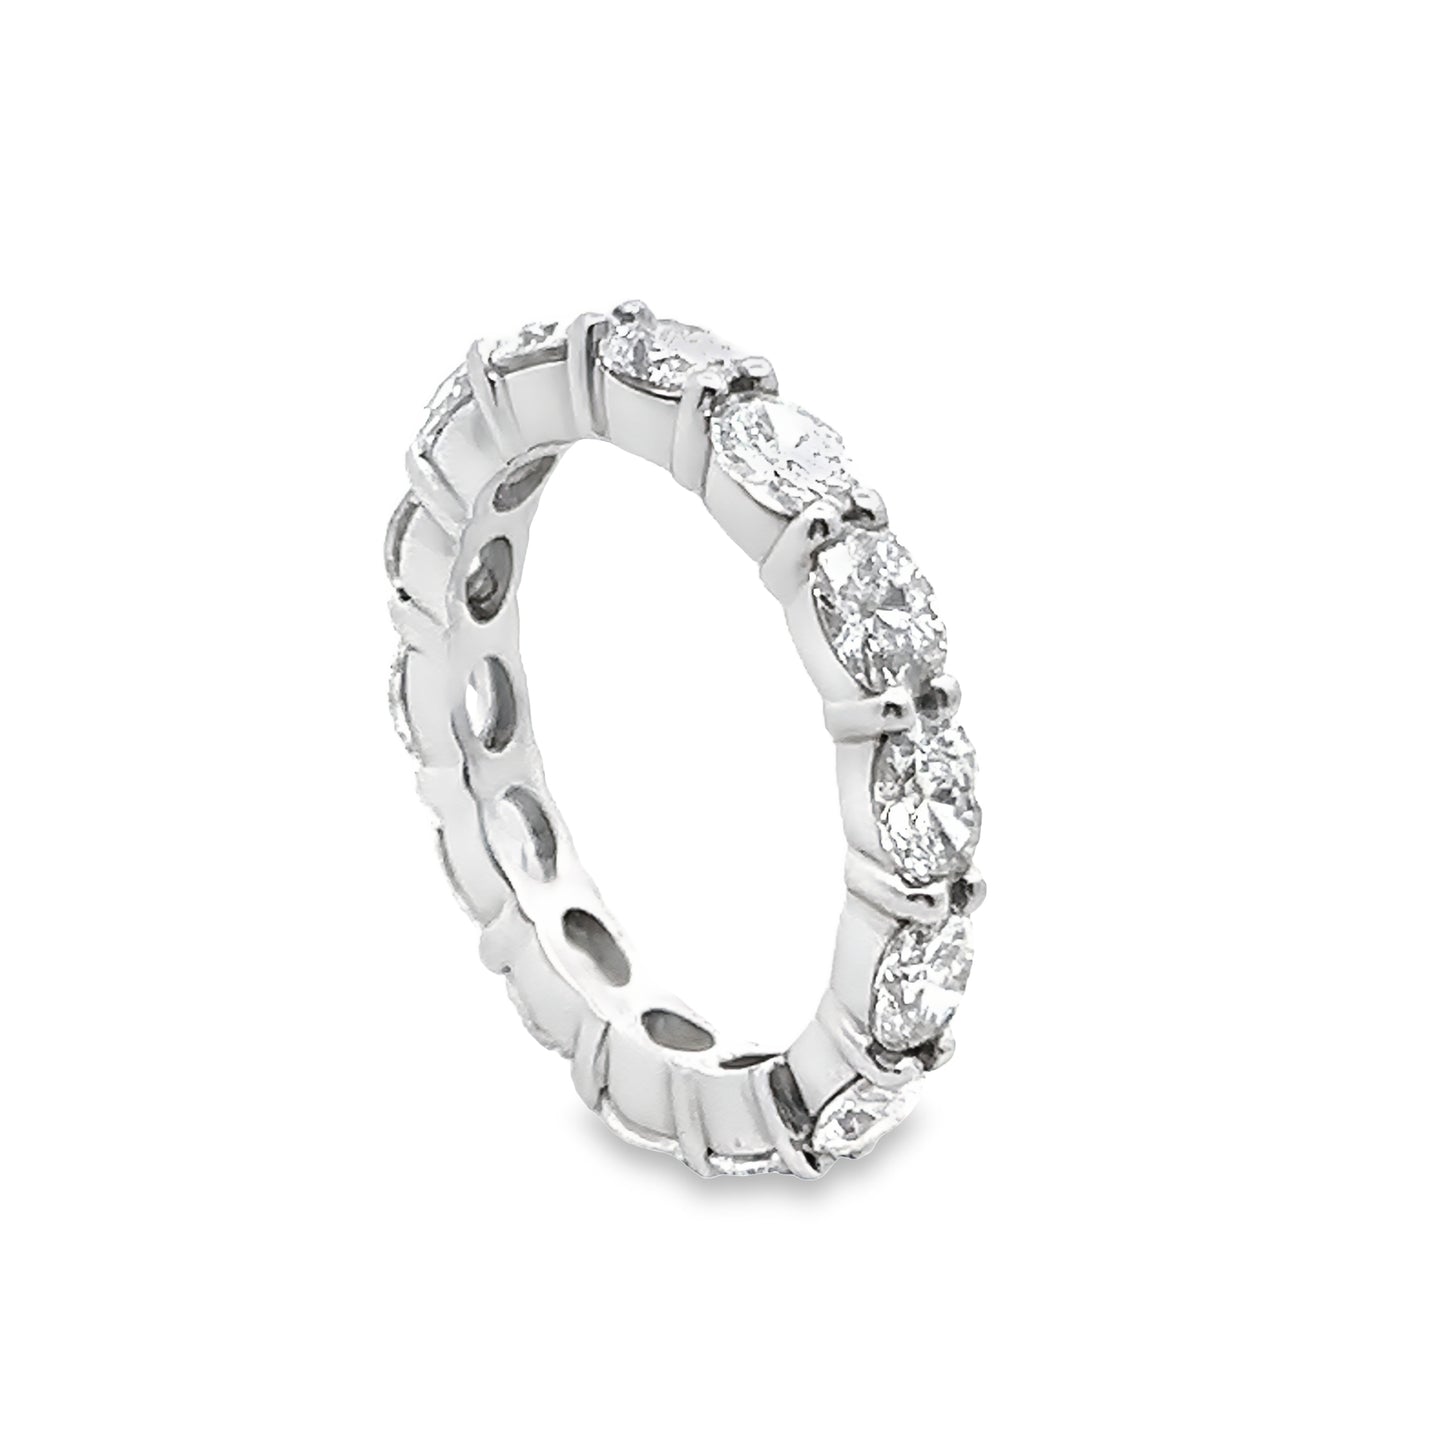 East-West Oval-Cut Diamond Eternity Ring in 14K White Gold